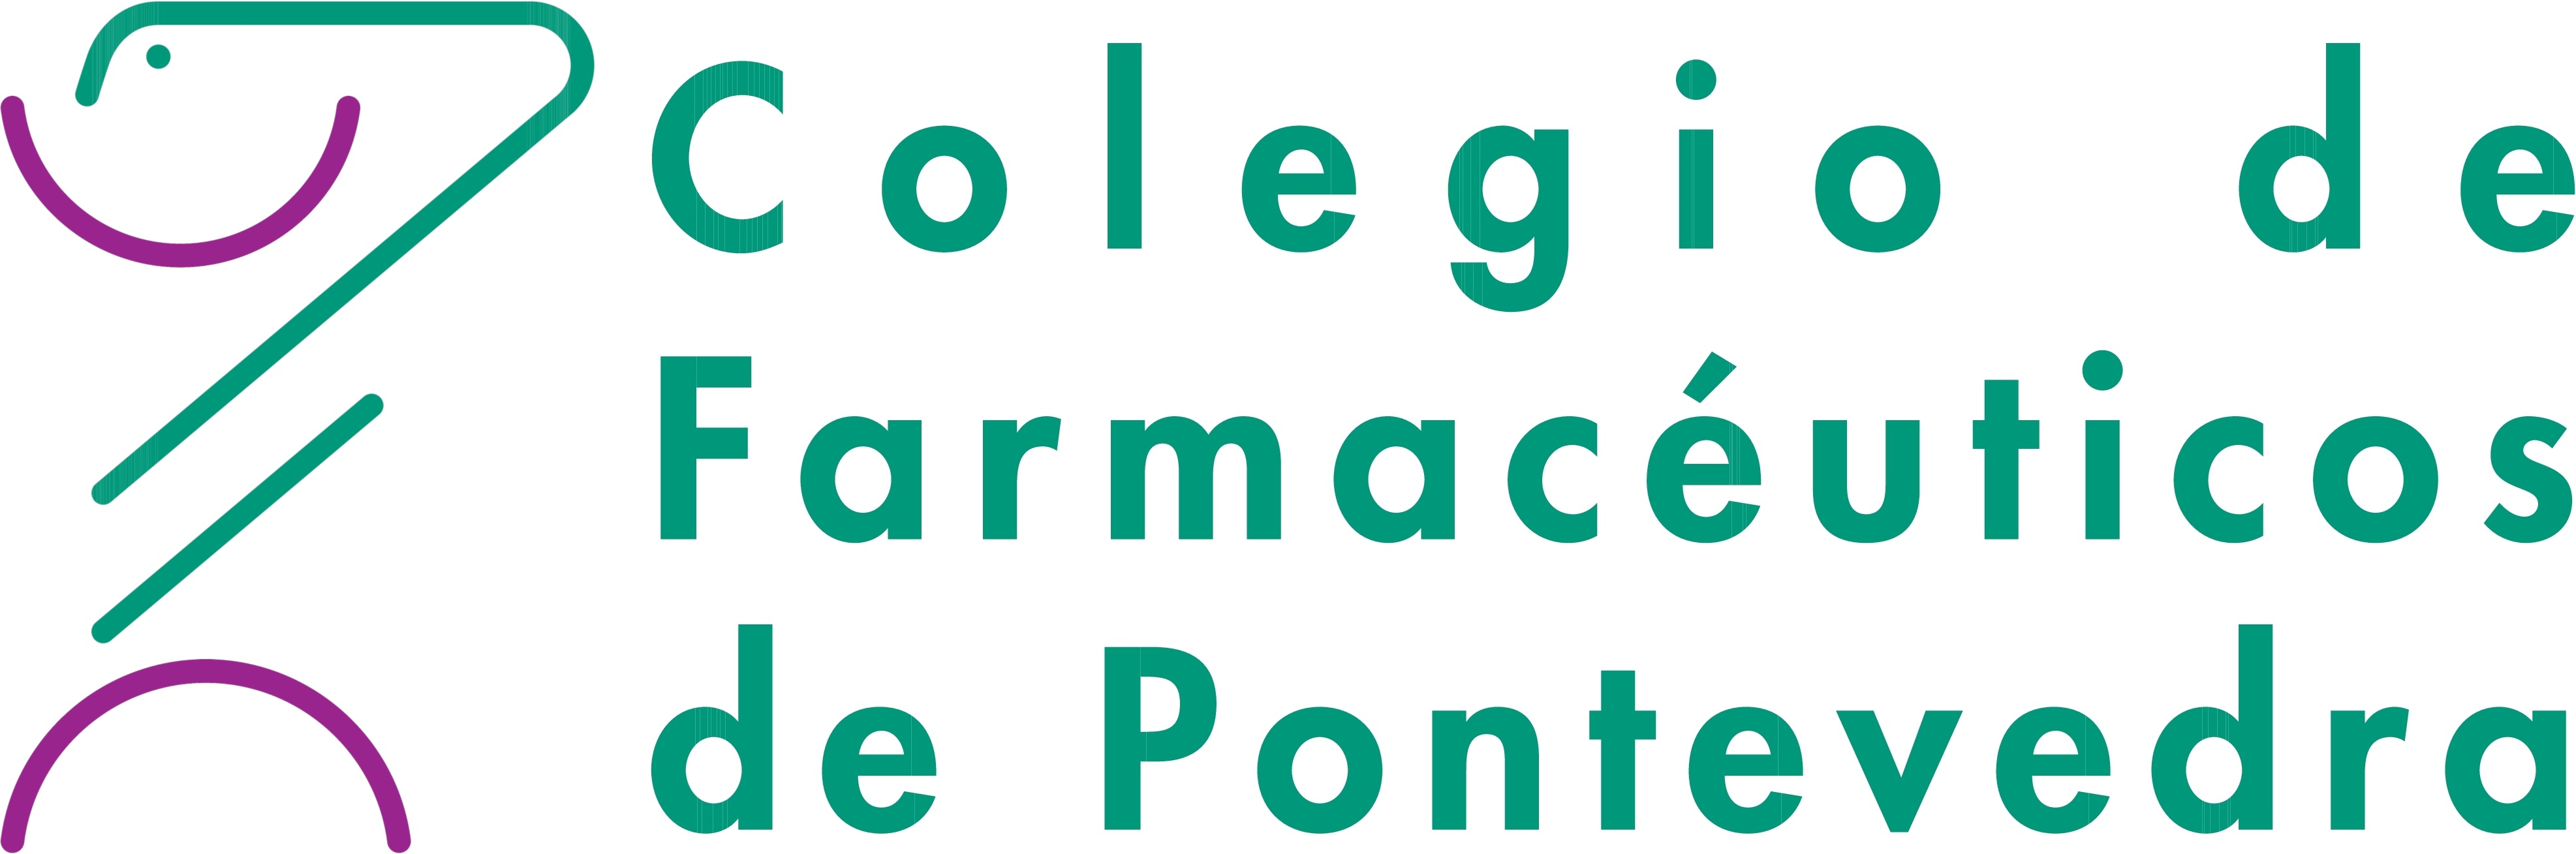 Nuevo cribado masivo en farmacias de Pontevedra - Colegio de Farmacéuticos de Pontevedra